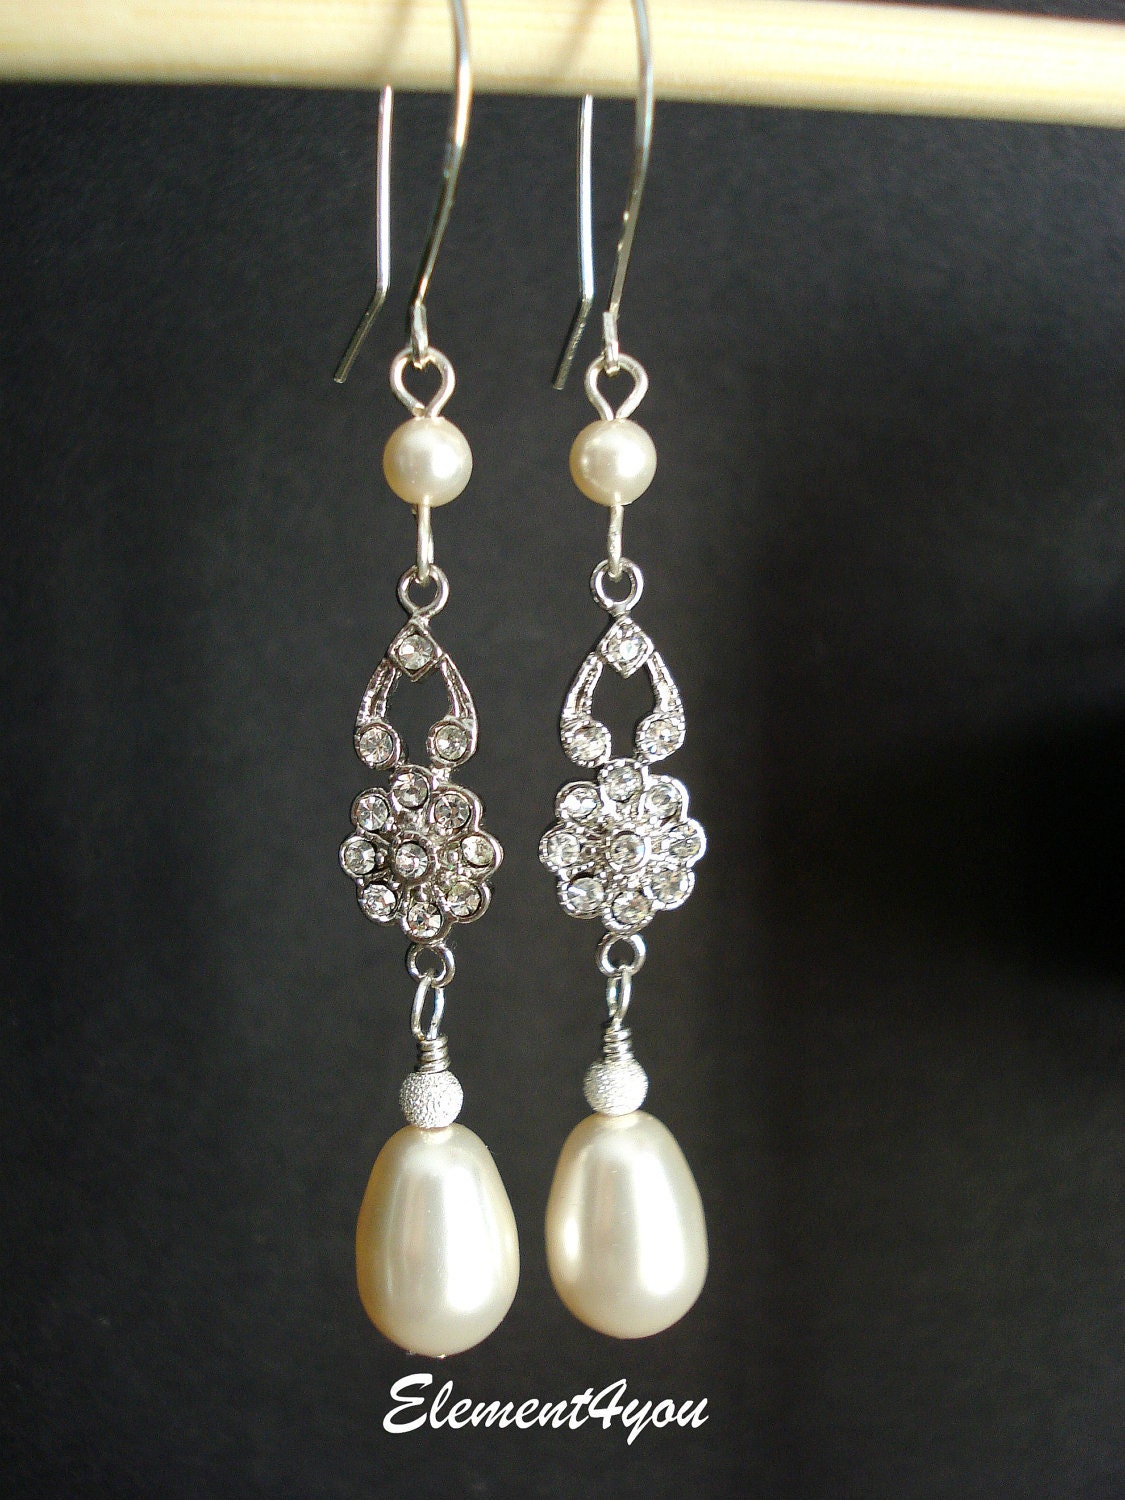 Rhinestone earrings Bridal Jewelry Pearl drop dangle Bride Bridesmaid gift Wedding earrings Swarovski pearl Silver Ivory or white teardrop